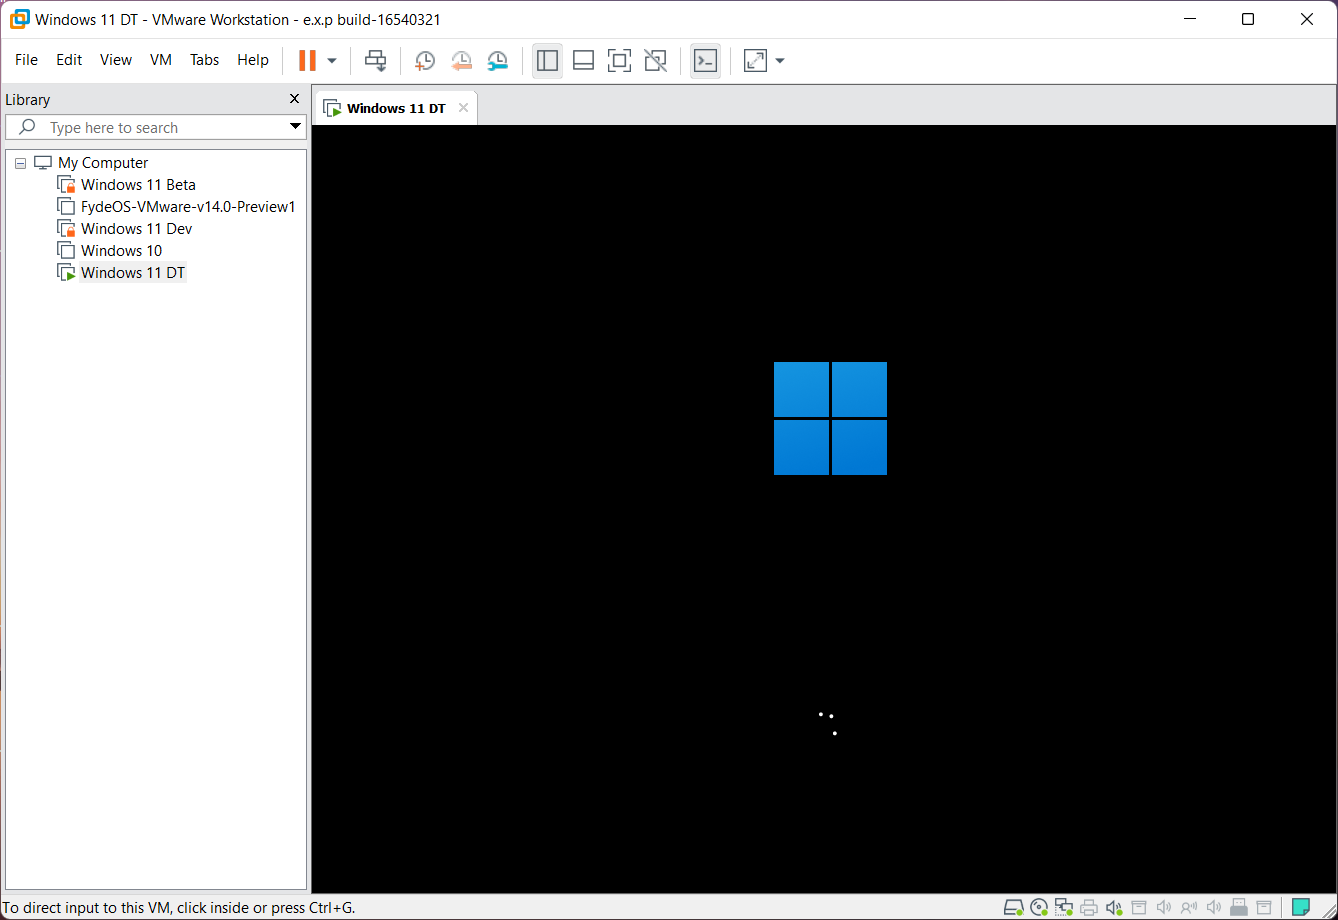 Windows 11 Boot animation